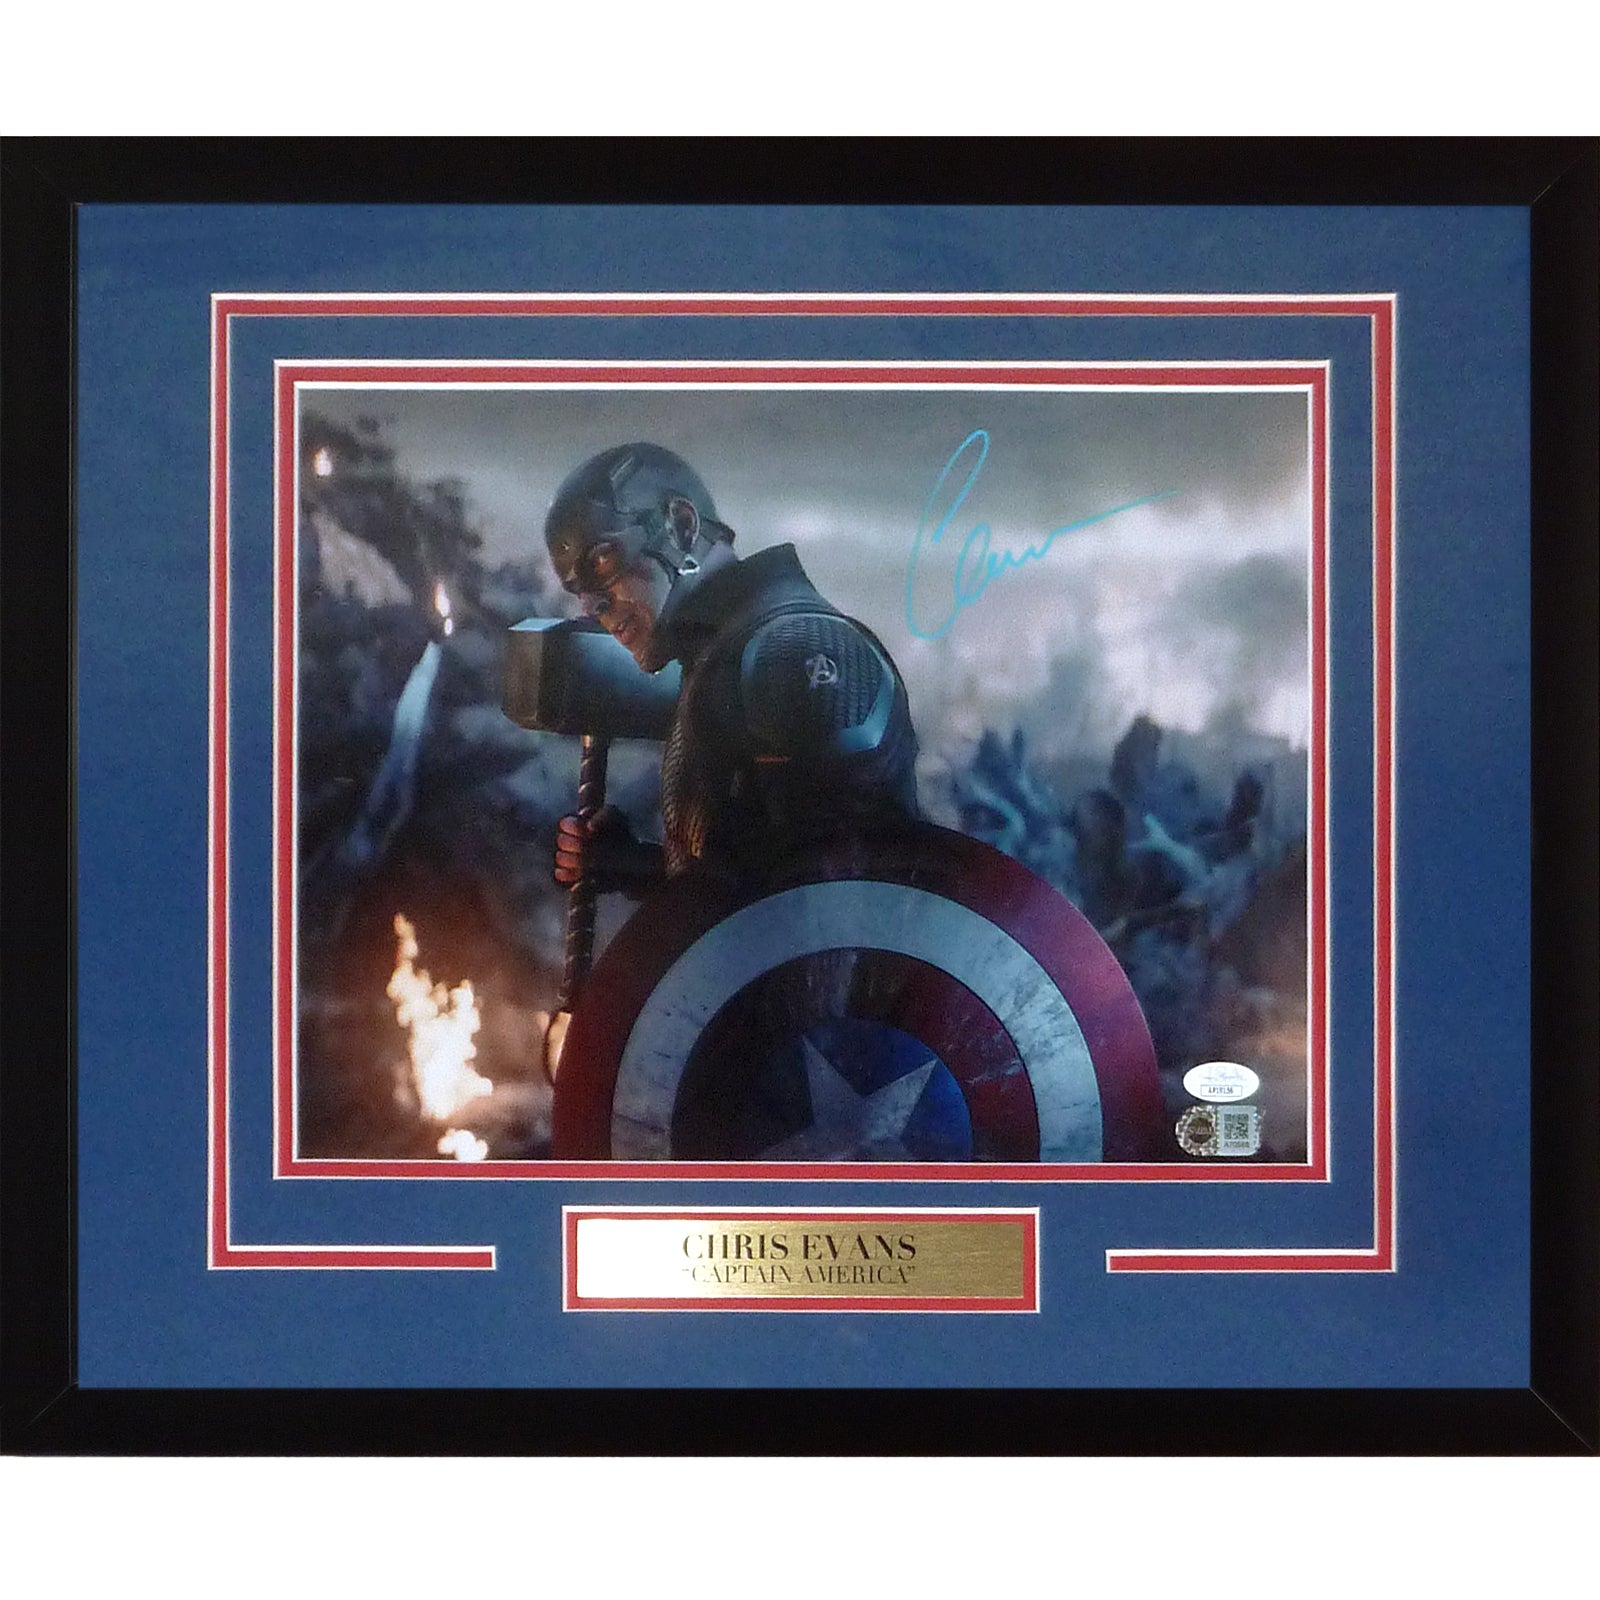 Chris Evans Autographed Marvel Captain America Deluxe Framed 11x14 Photo - SWAU JSA